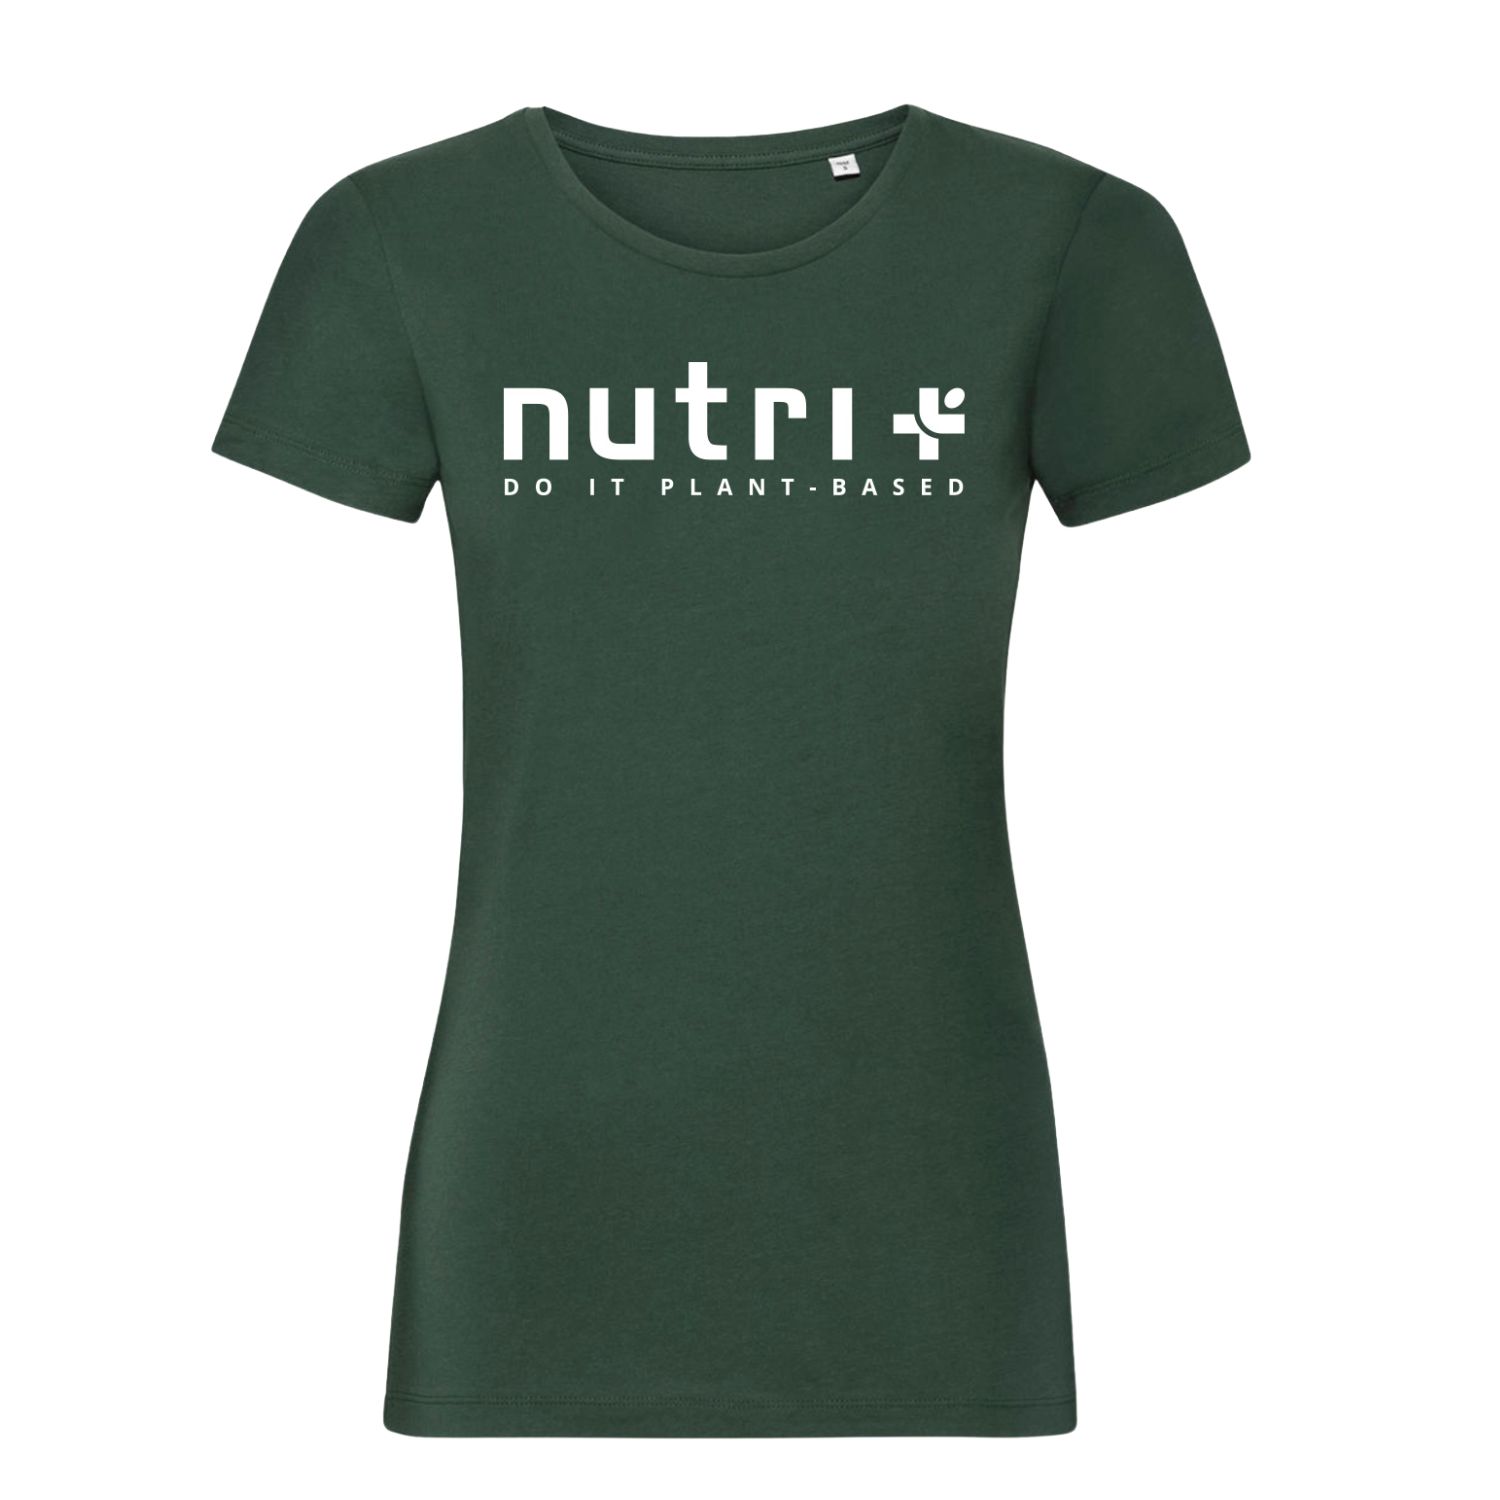 Team nutri+ Women's T-Shirt